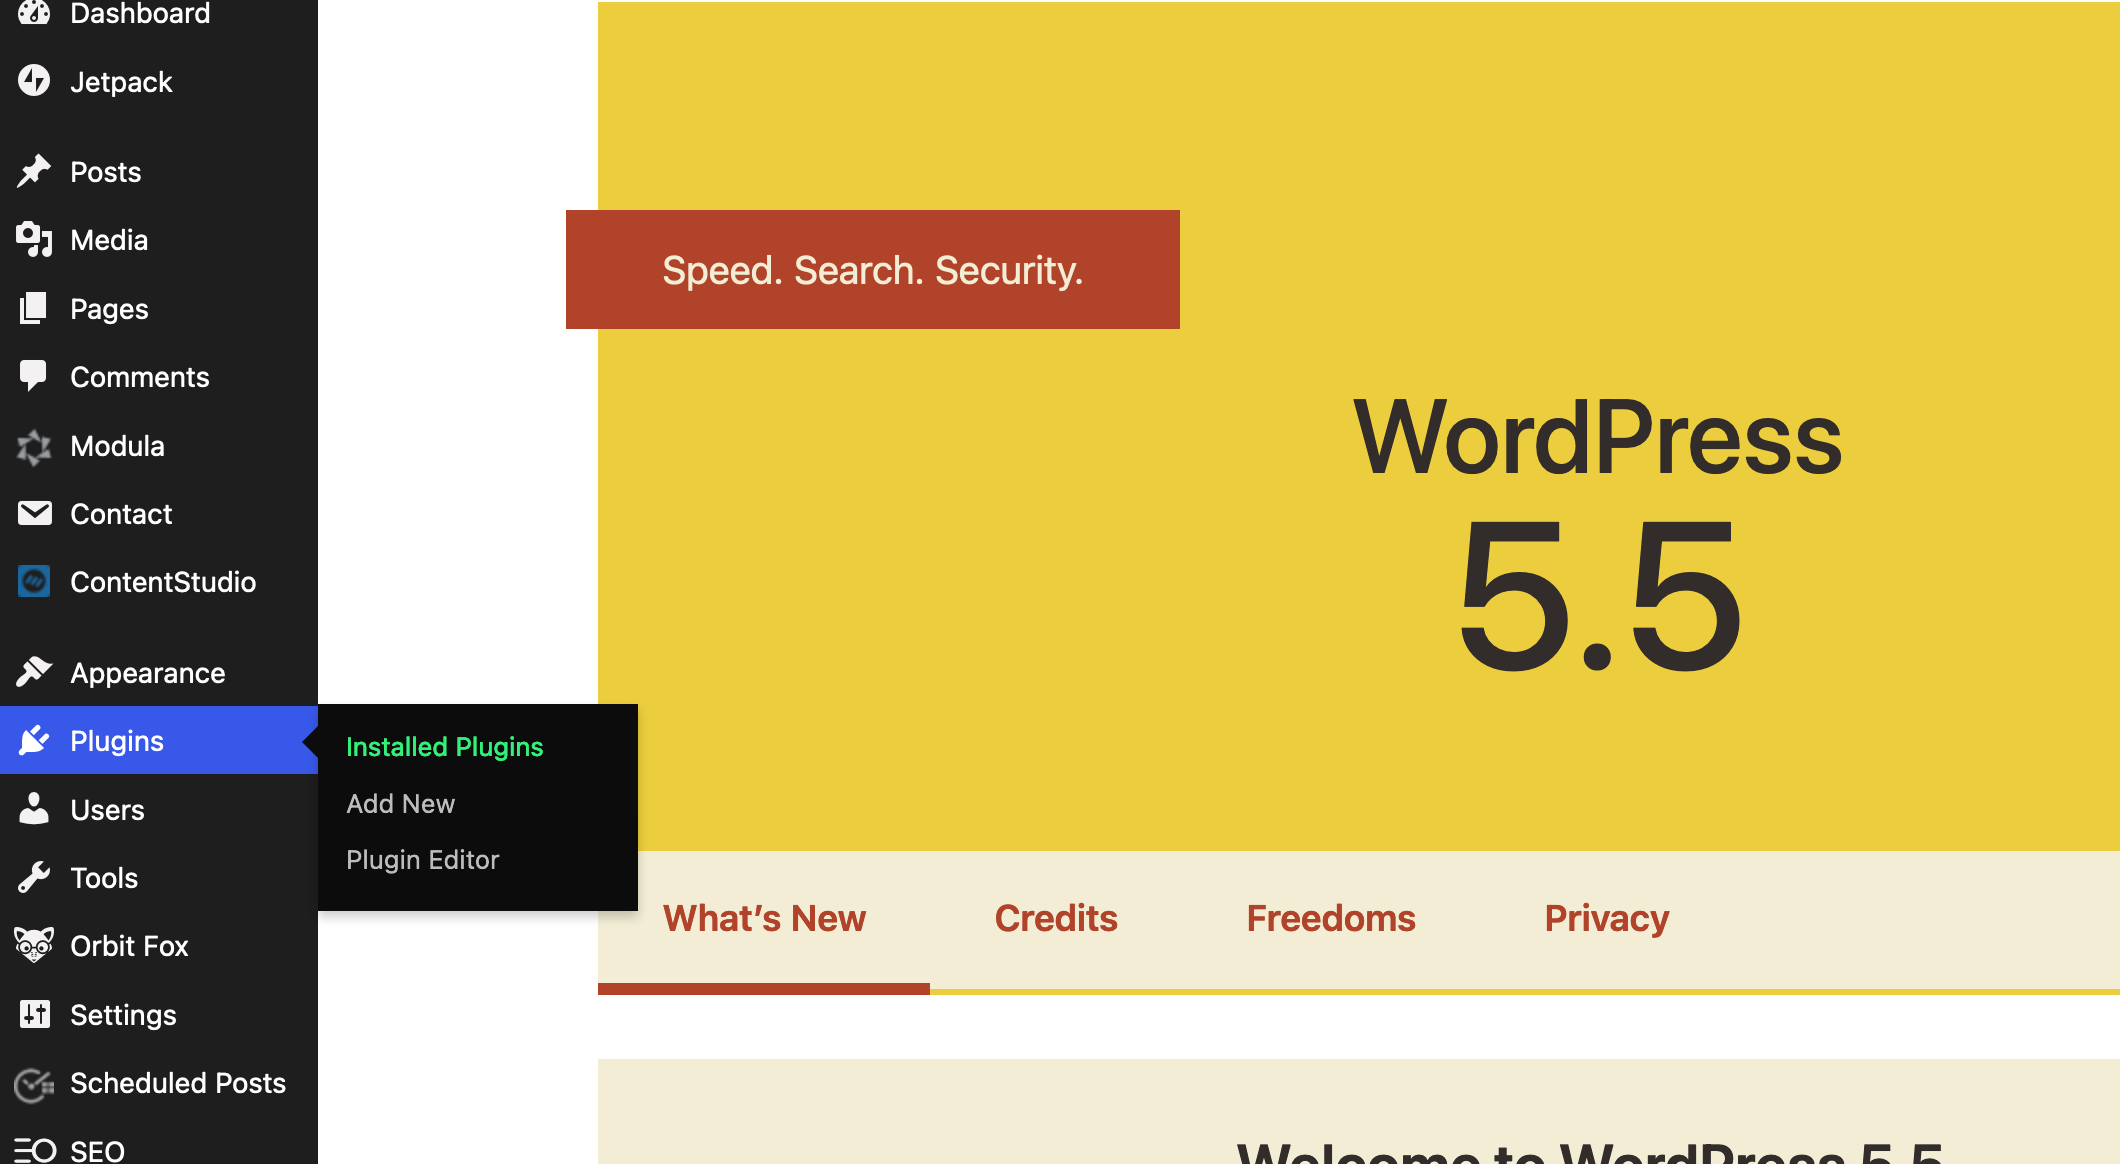 WordPress 5.5 dashboard.